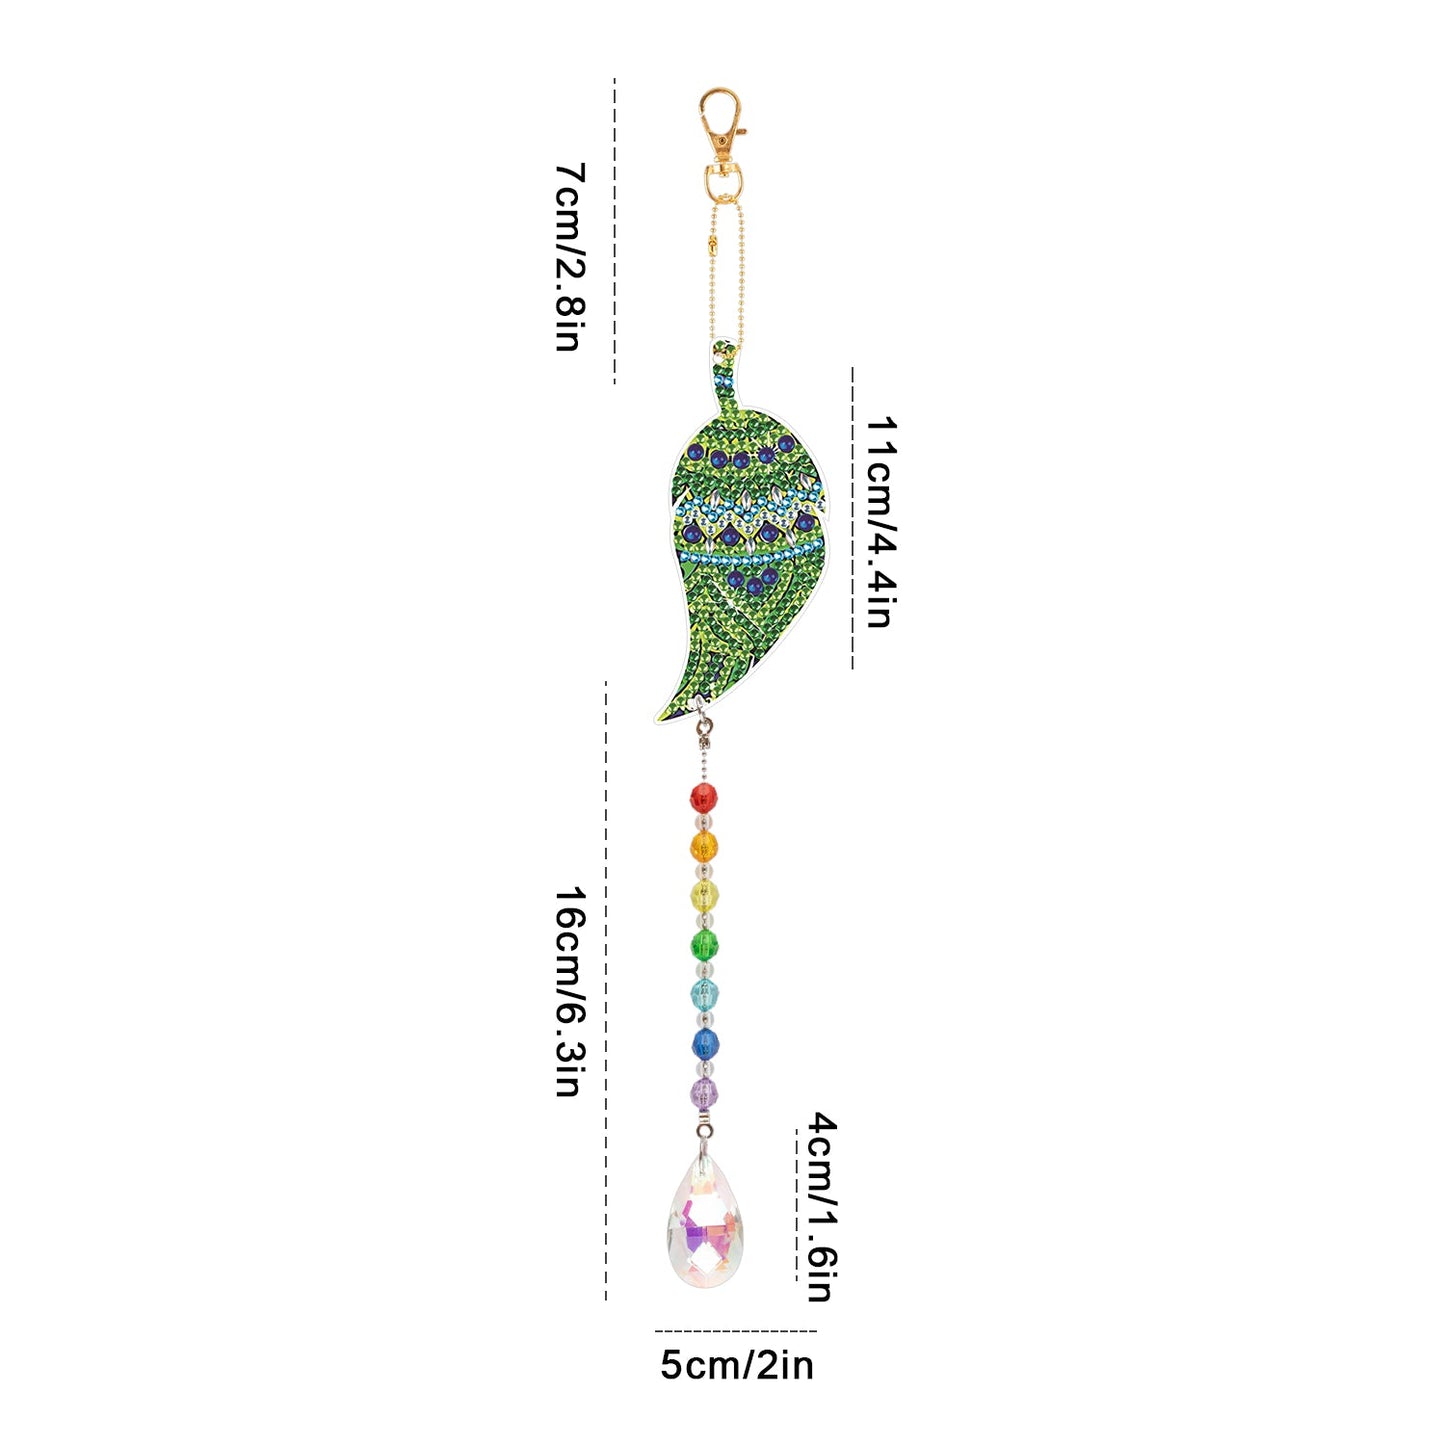 Diamond Painting Suncatcher Kit | DIY Crystal Prism Teardrop Pendant Hanging